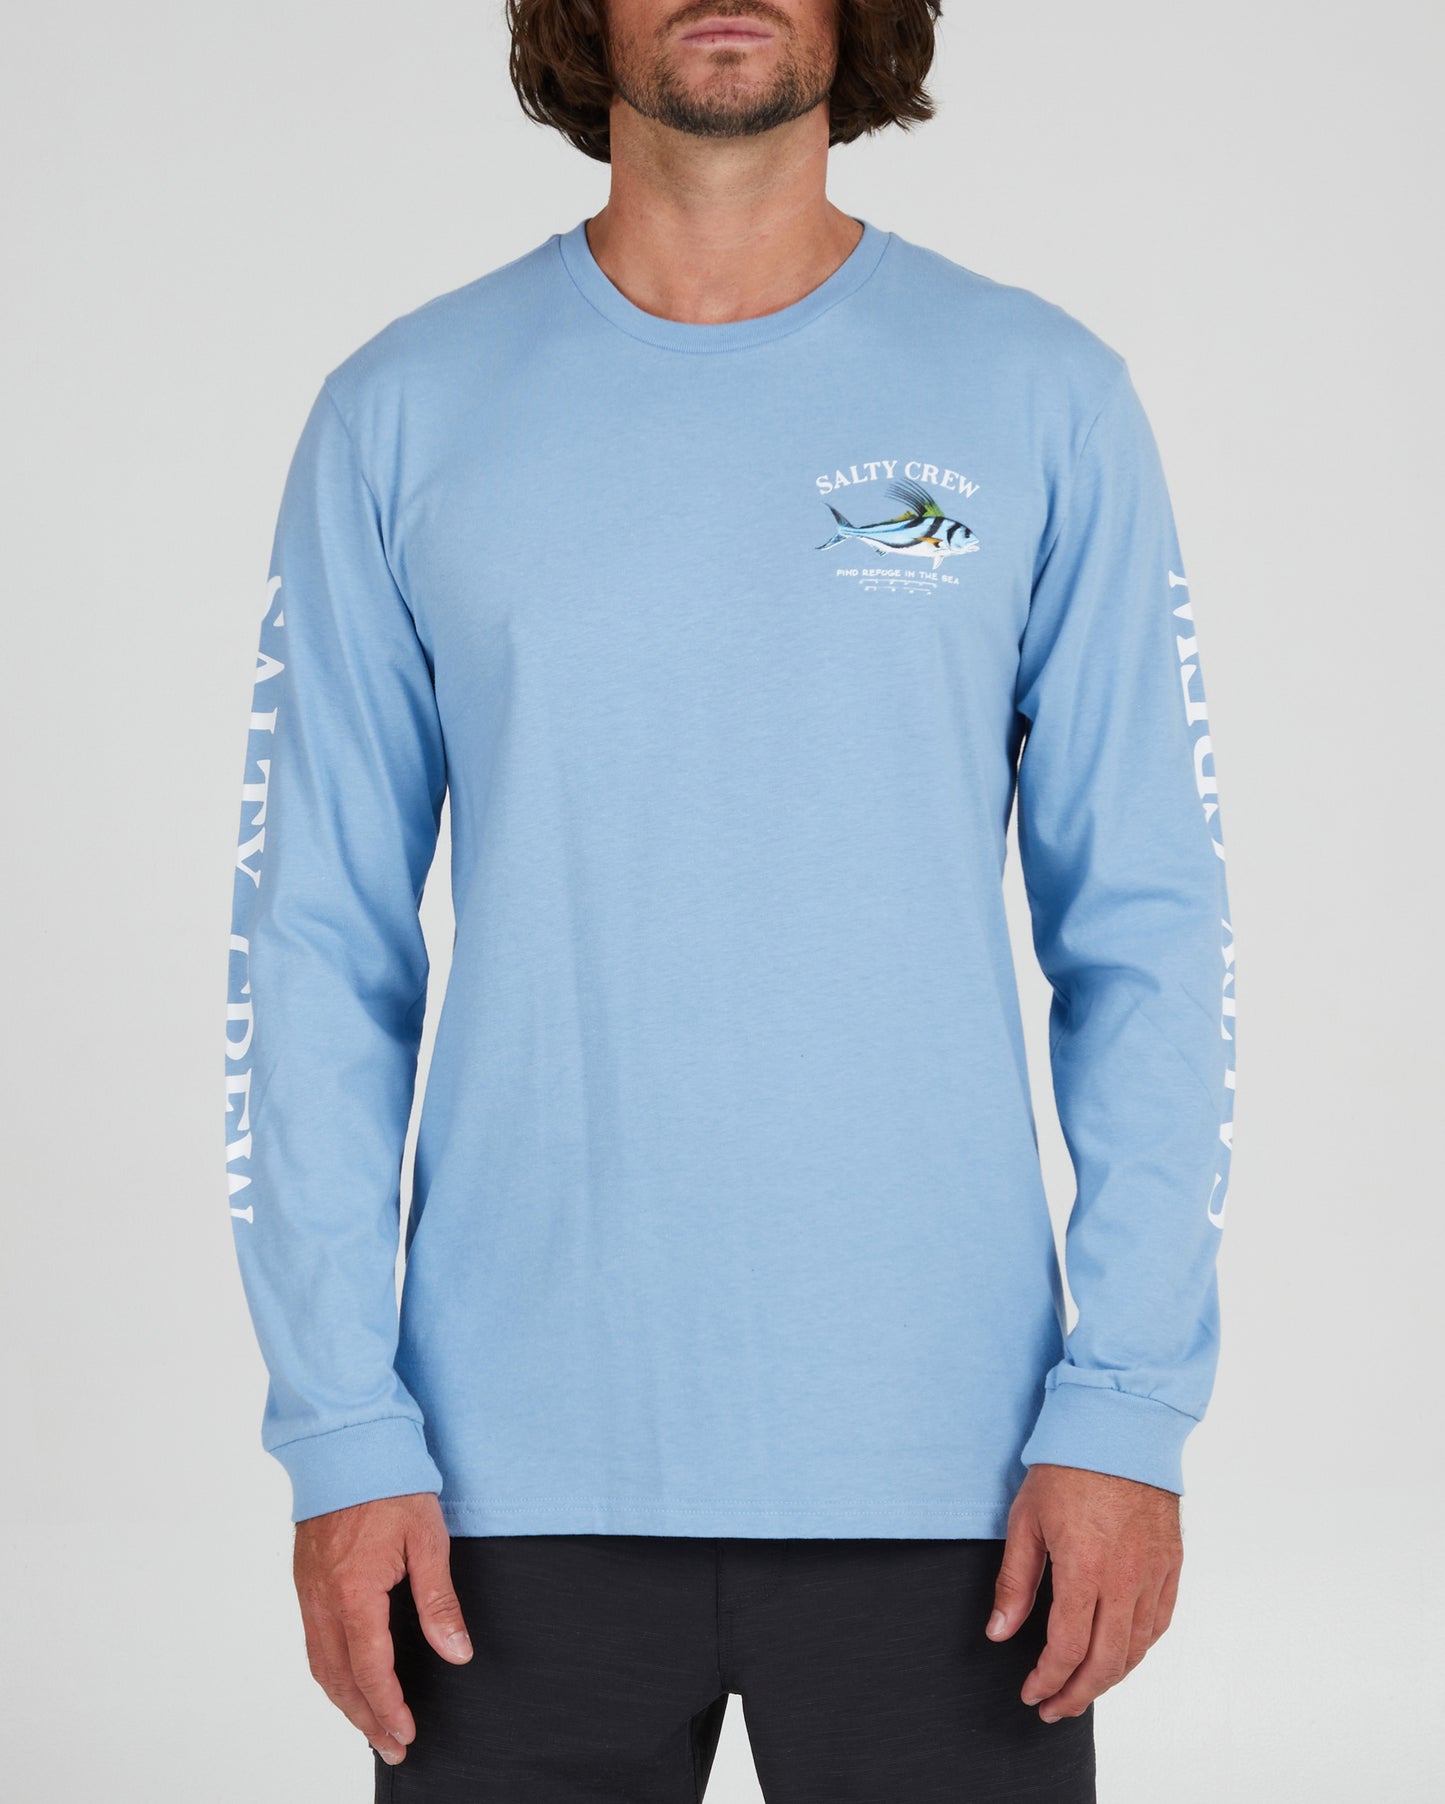 Salty Crew Fishing Shirt Mens Medium Dark Blue Long Sleeve Cotton Pullover